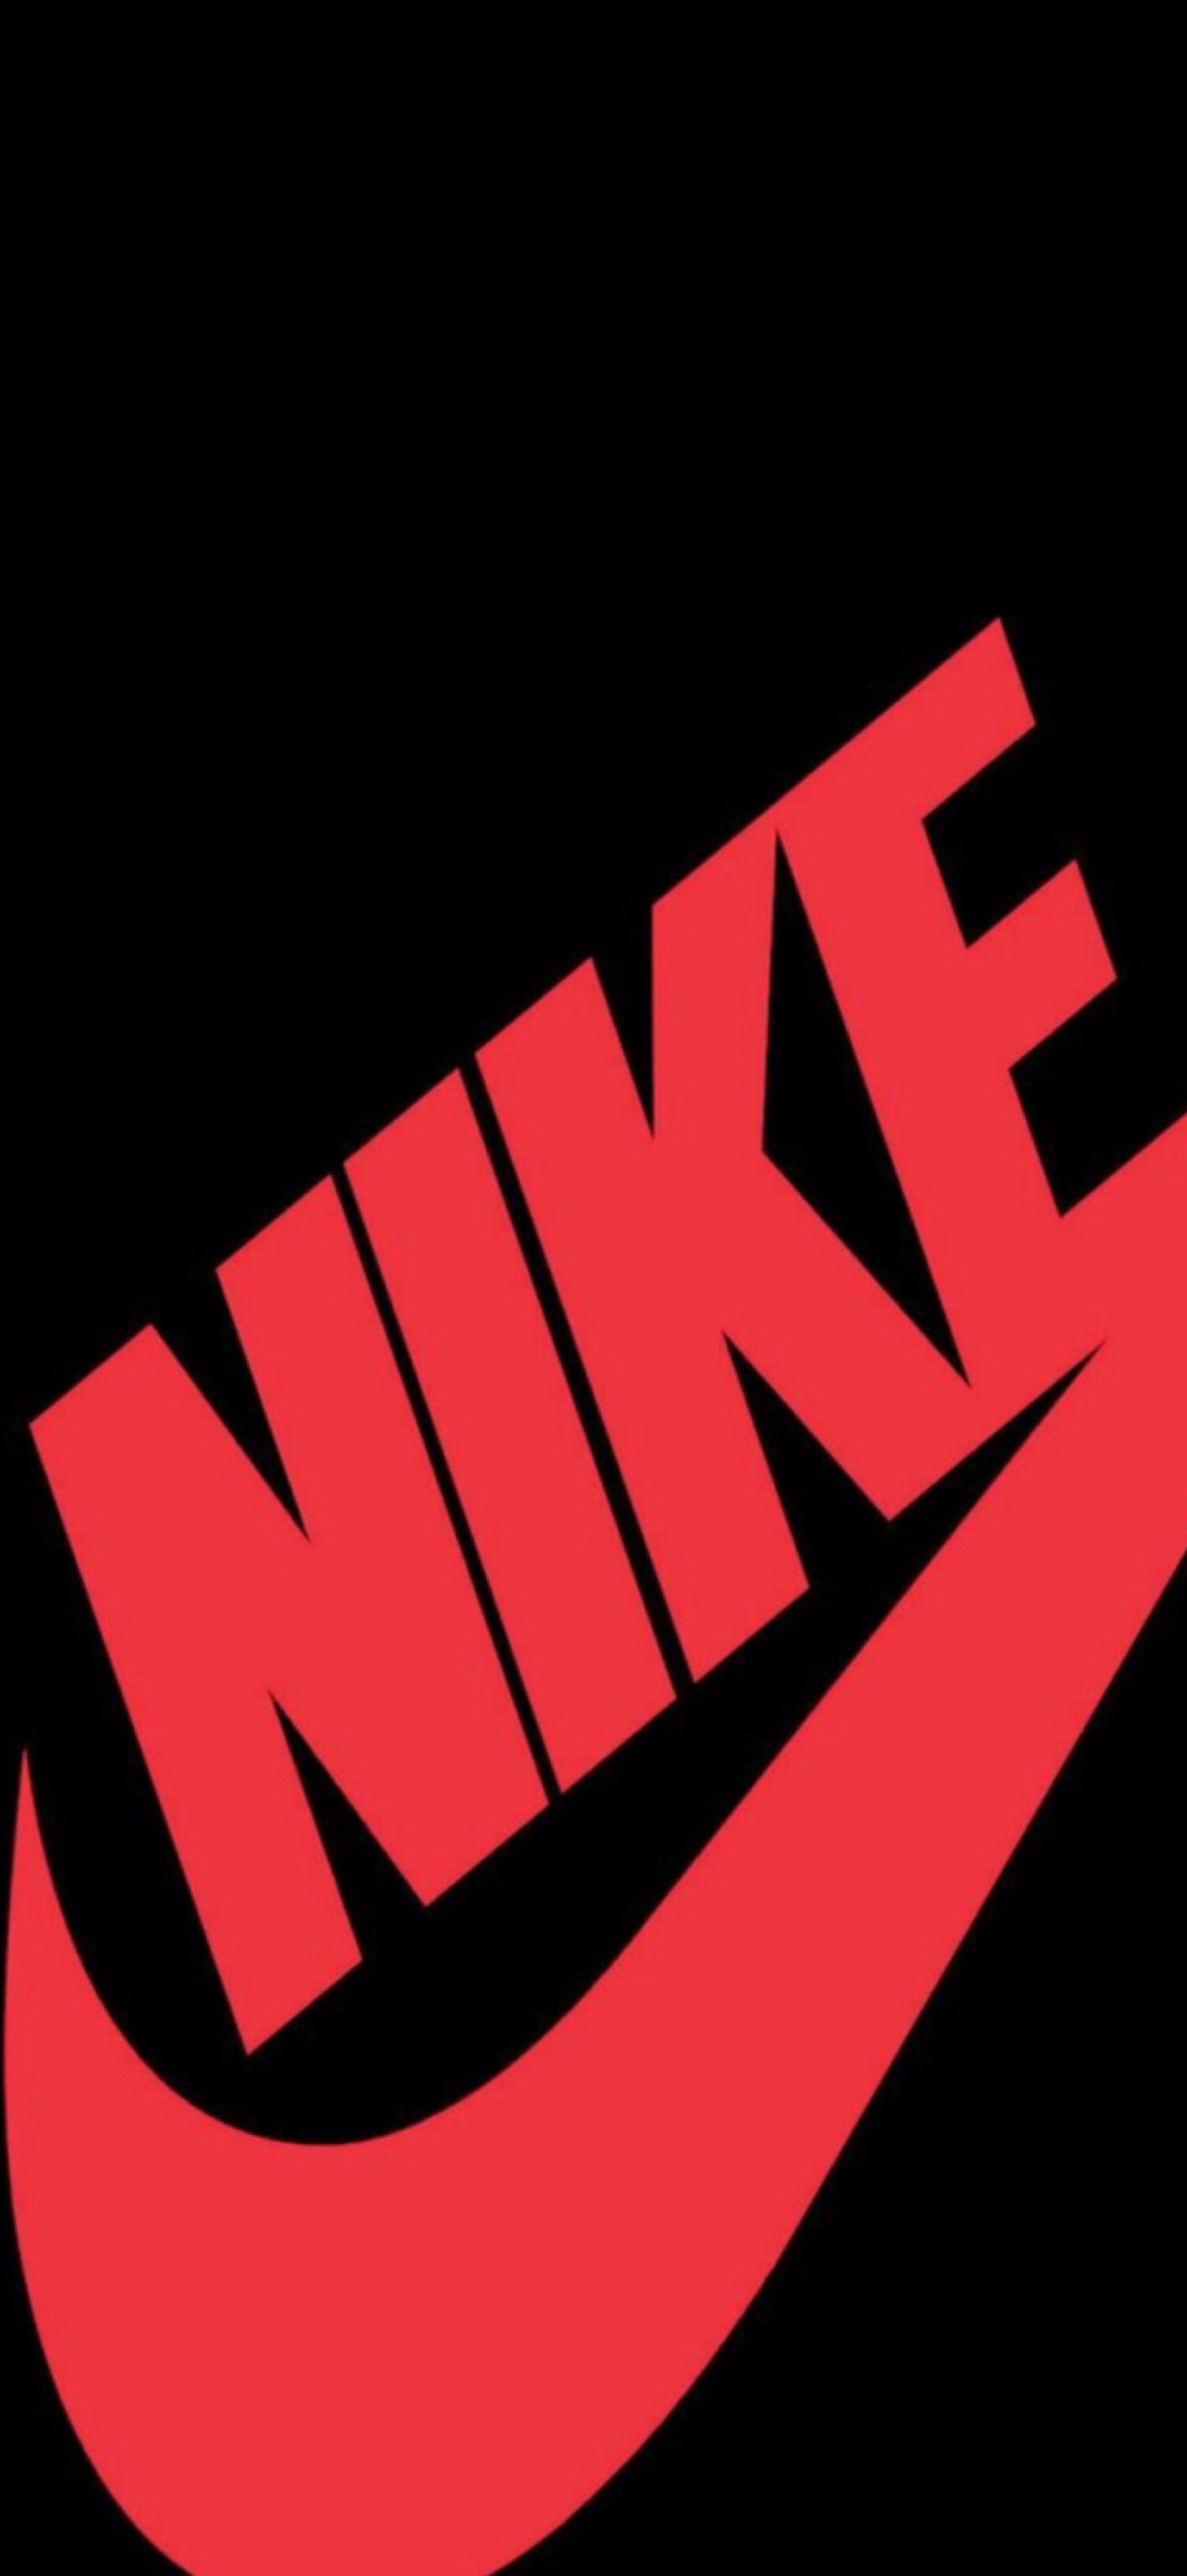 Wallpaper iPhone X logo. Nike wallpaper, Nike wallpaper